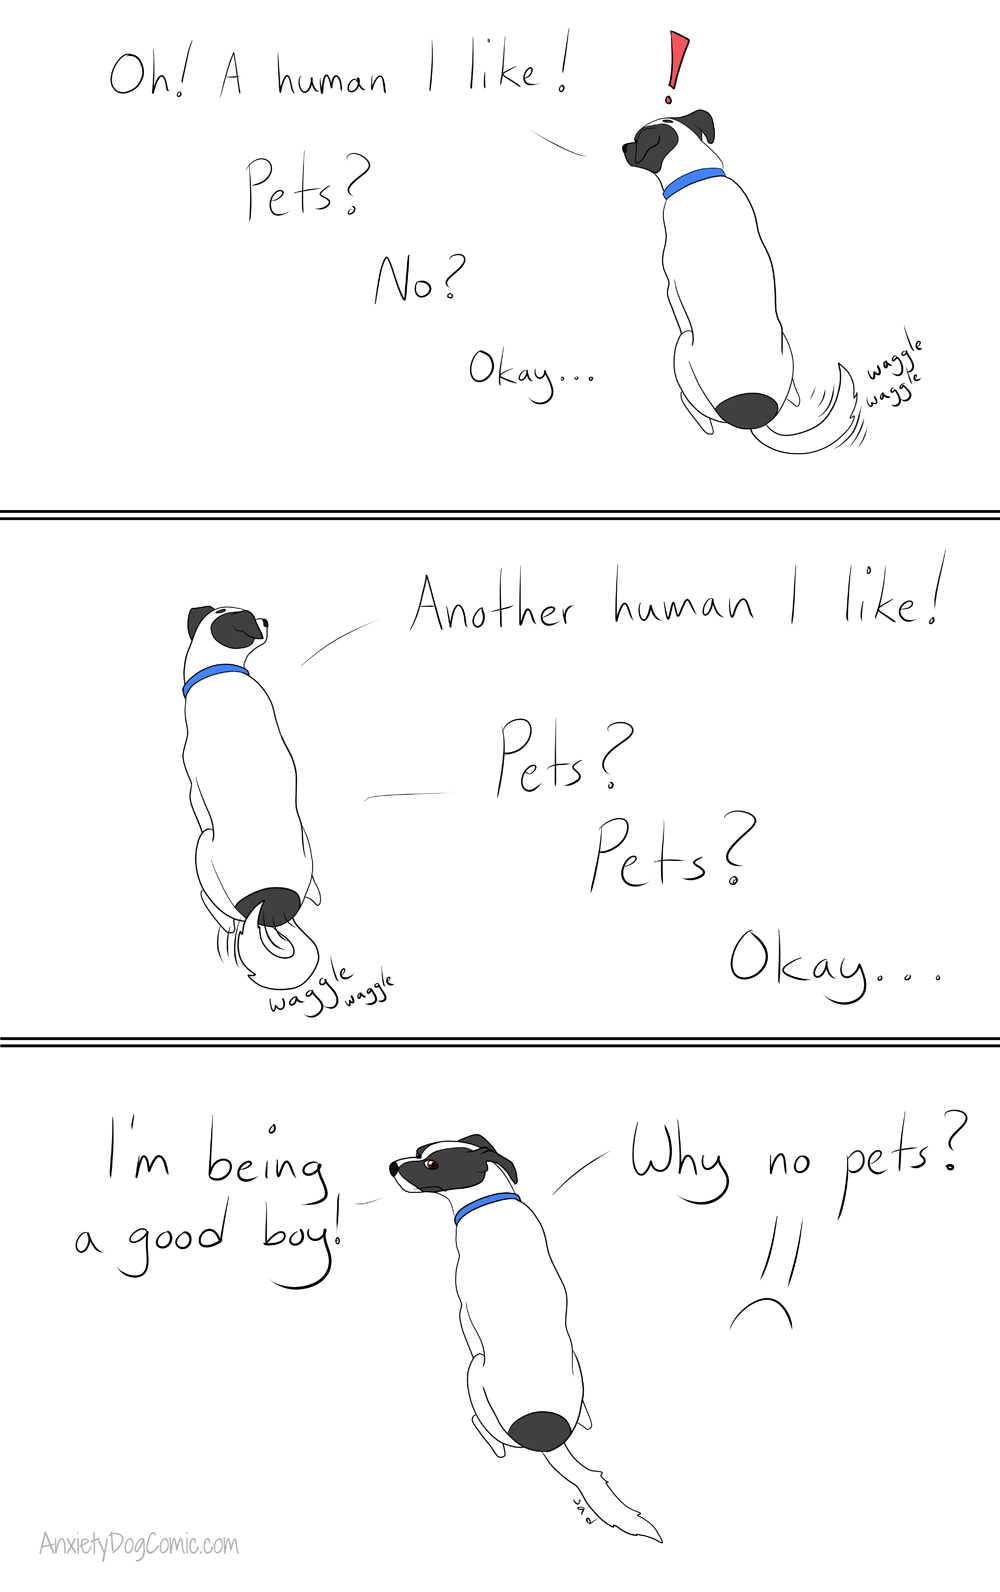 Why No Pets